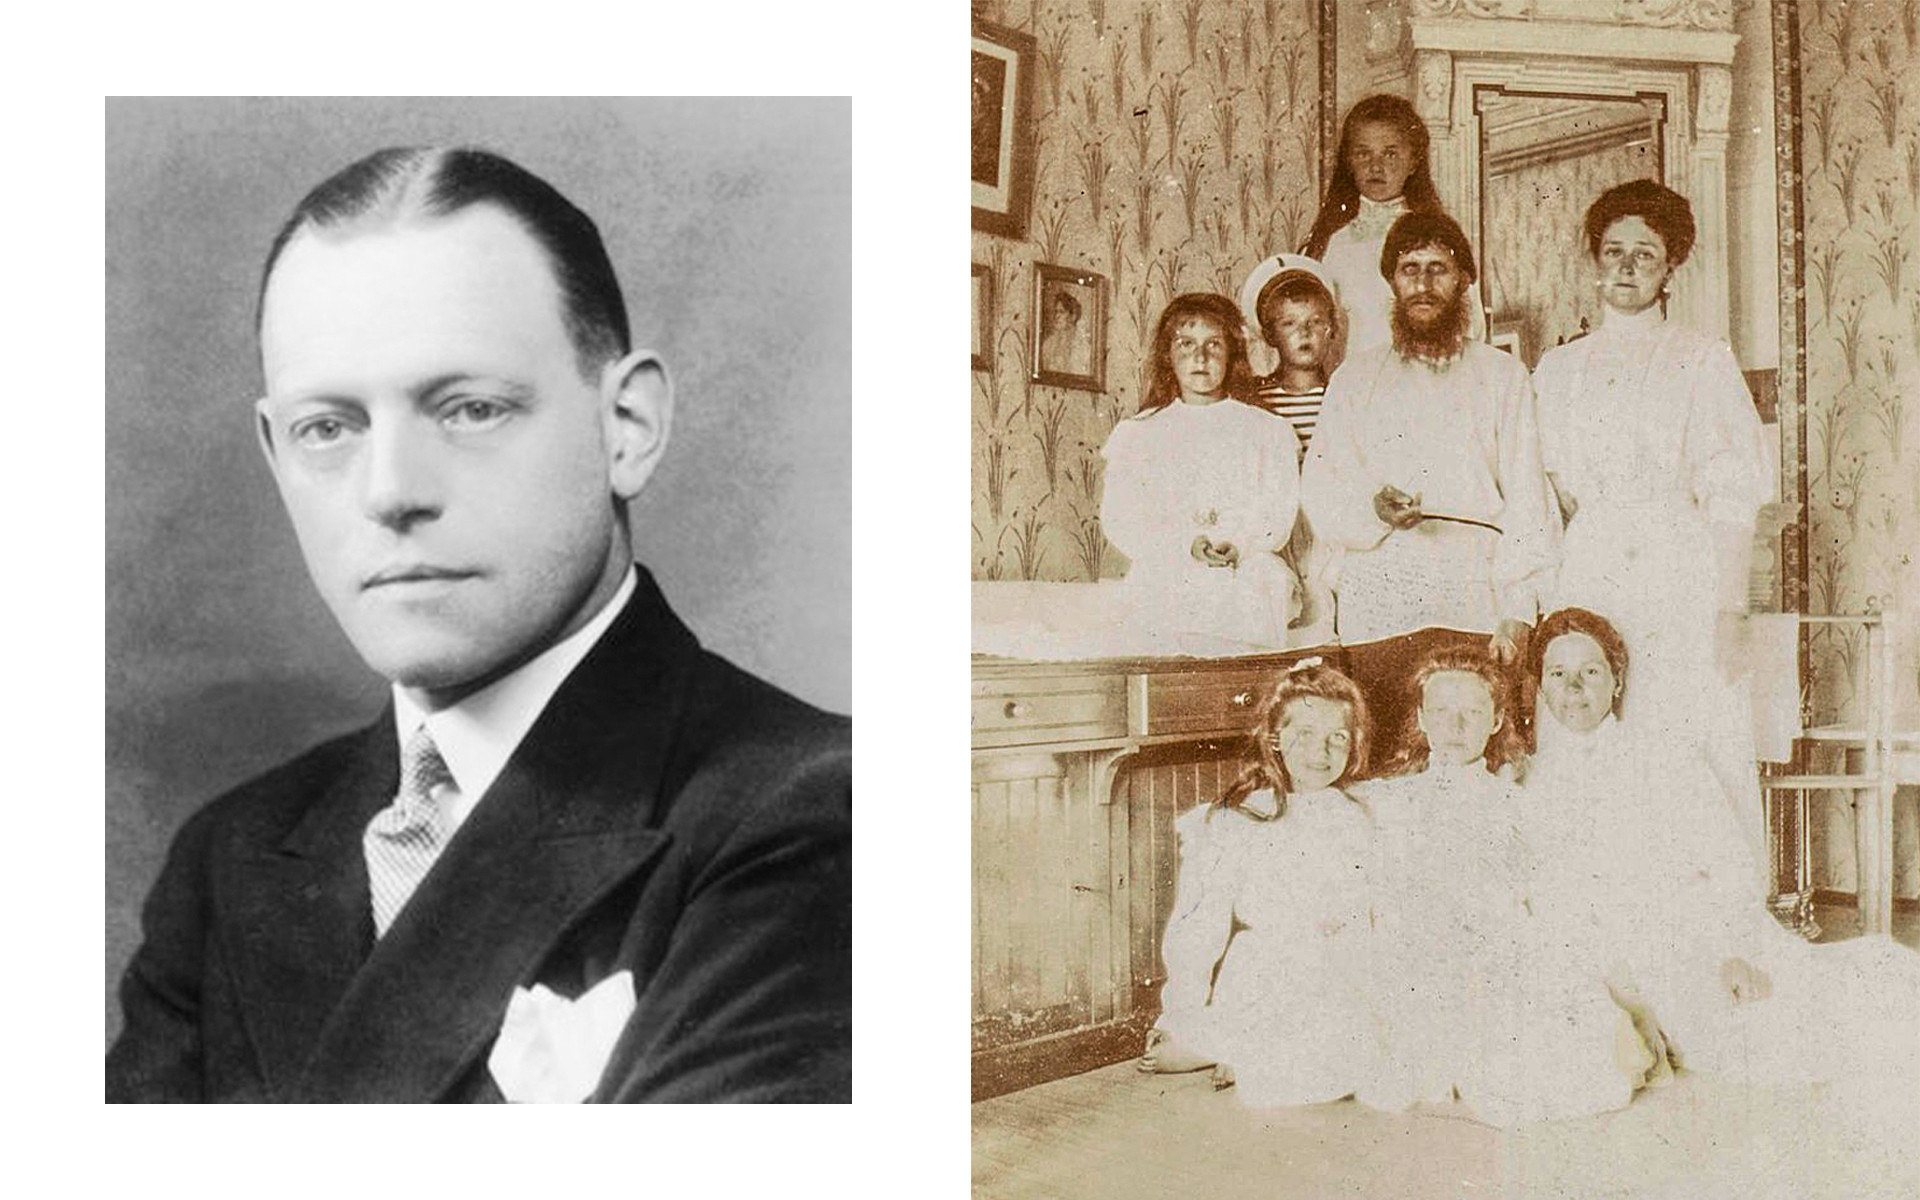 Left: Oswald Rayner. Right: Rasputin with the Romanov family